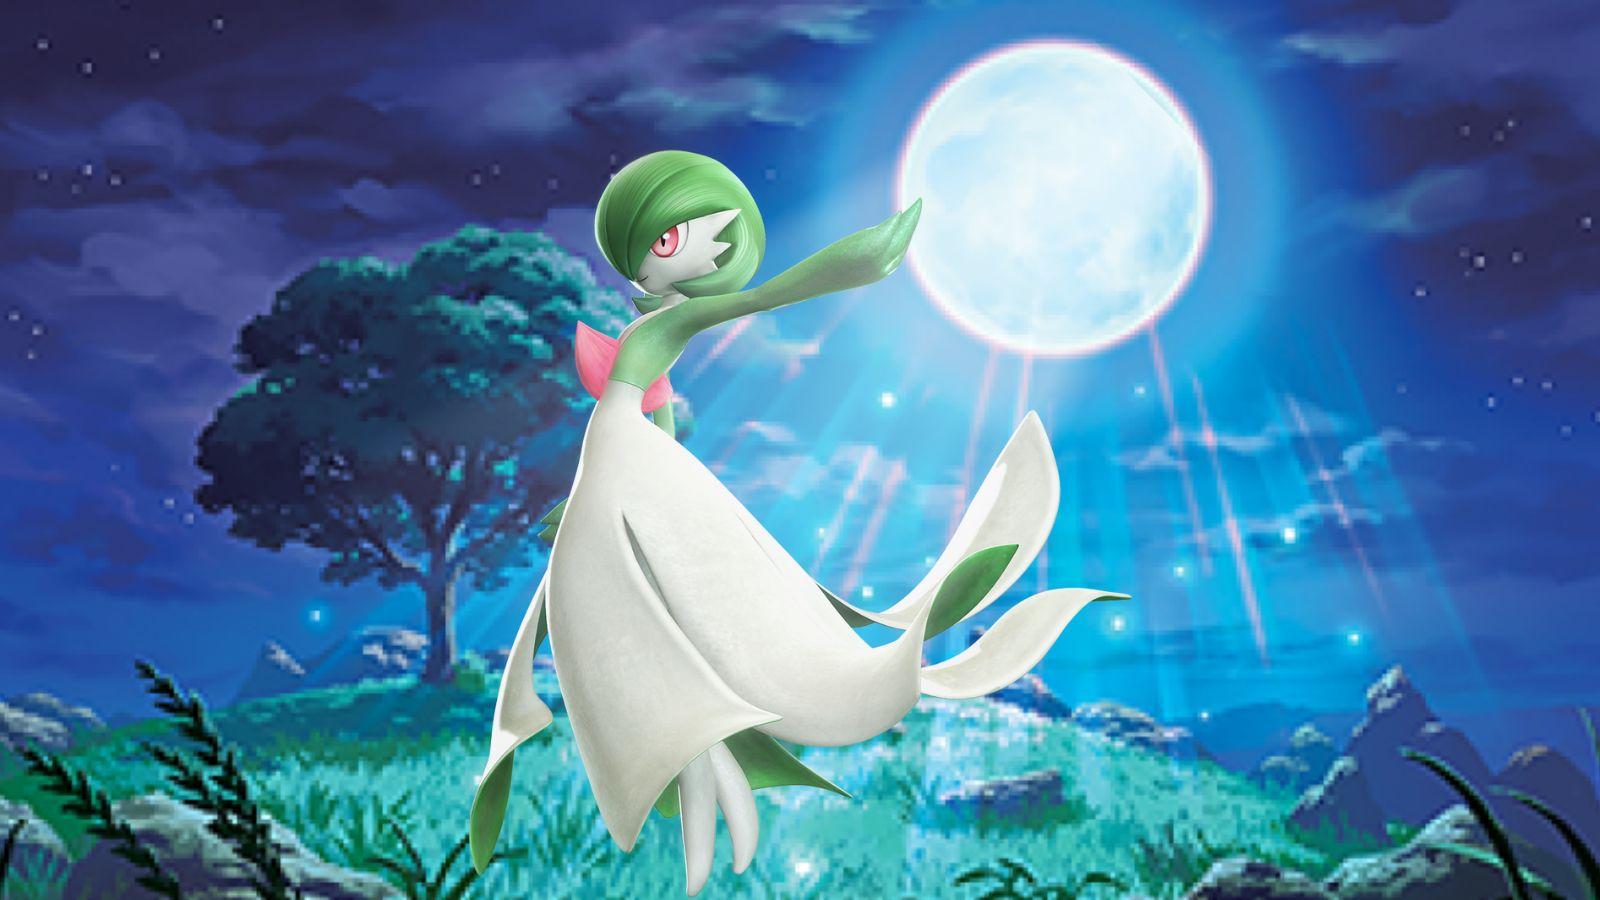 Gardevoir standing on the artwork from The Pokémon TCG card: Moonlit Hill.